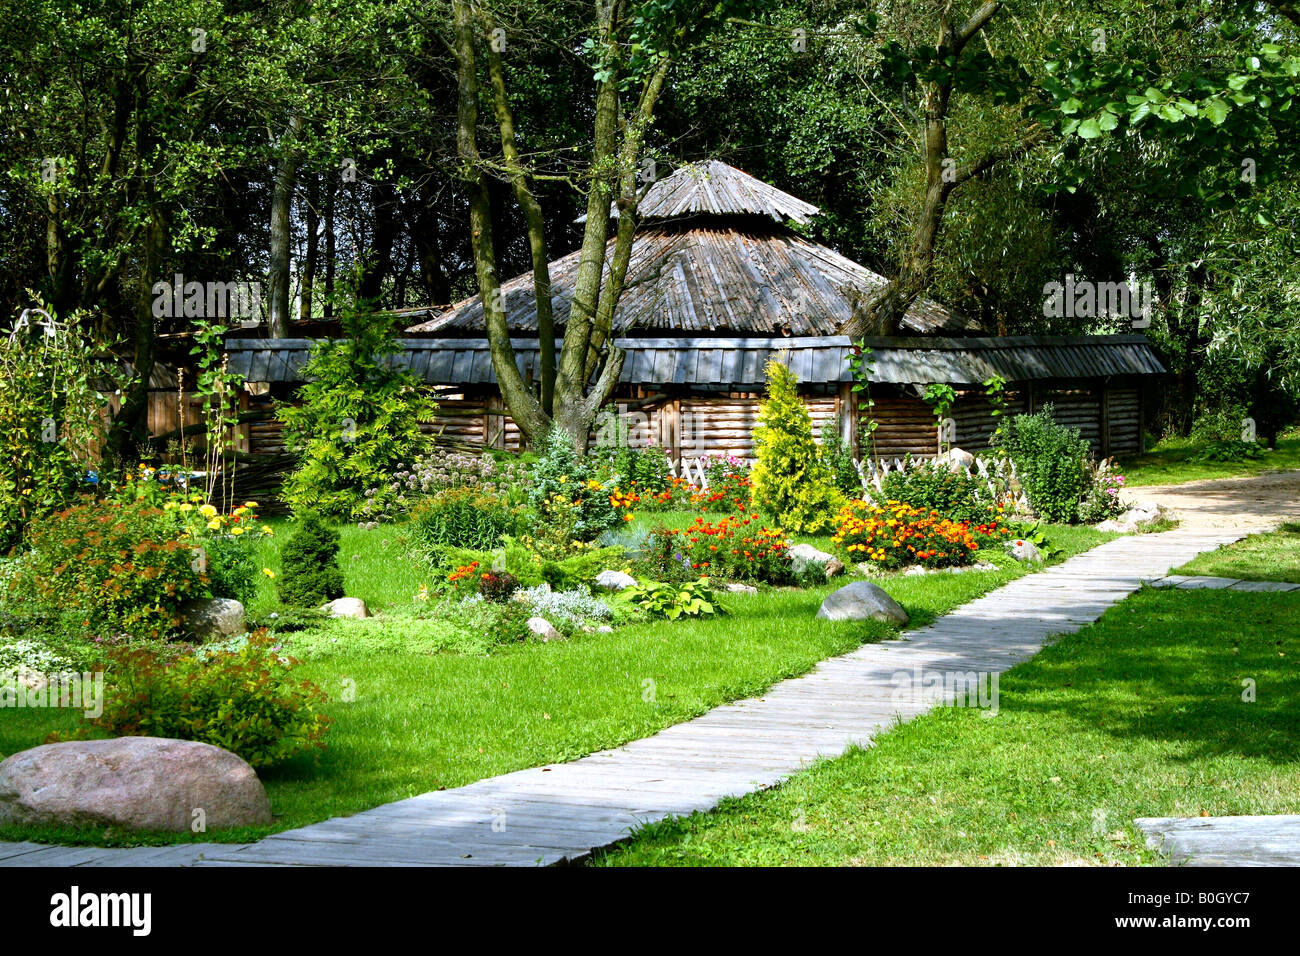 Wooden Hut in a green grassy meadow field at Dudutki Village, Belarus September, 2007 Stock Photo